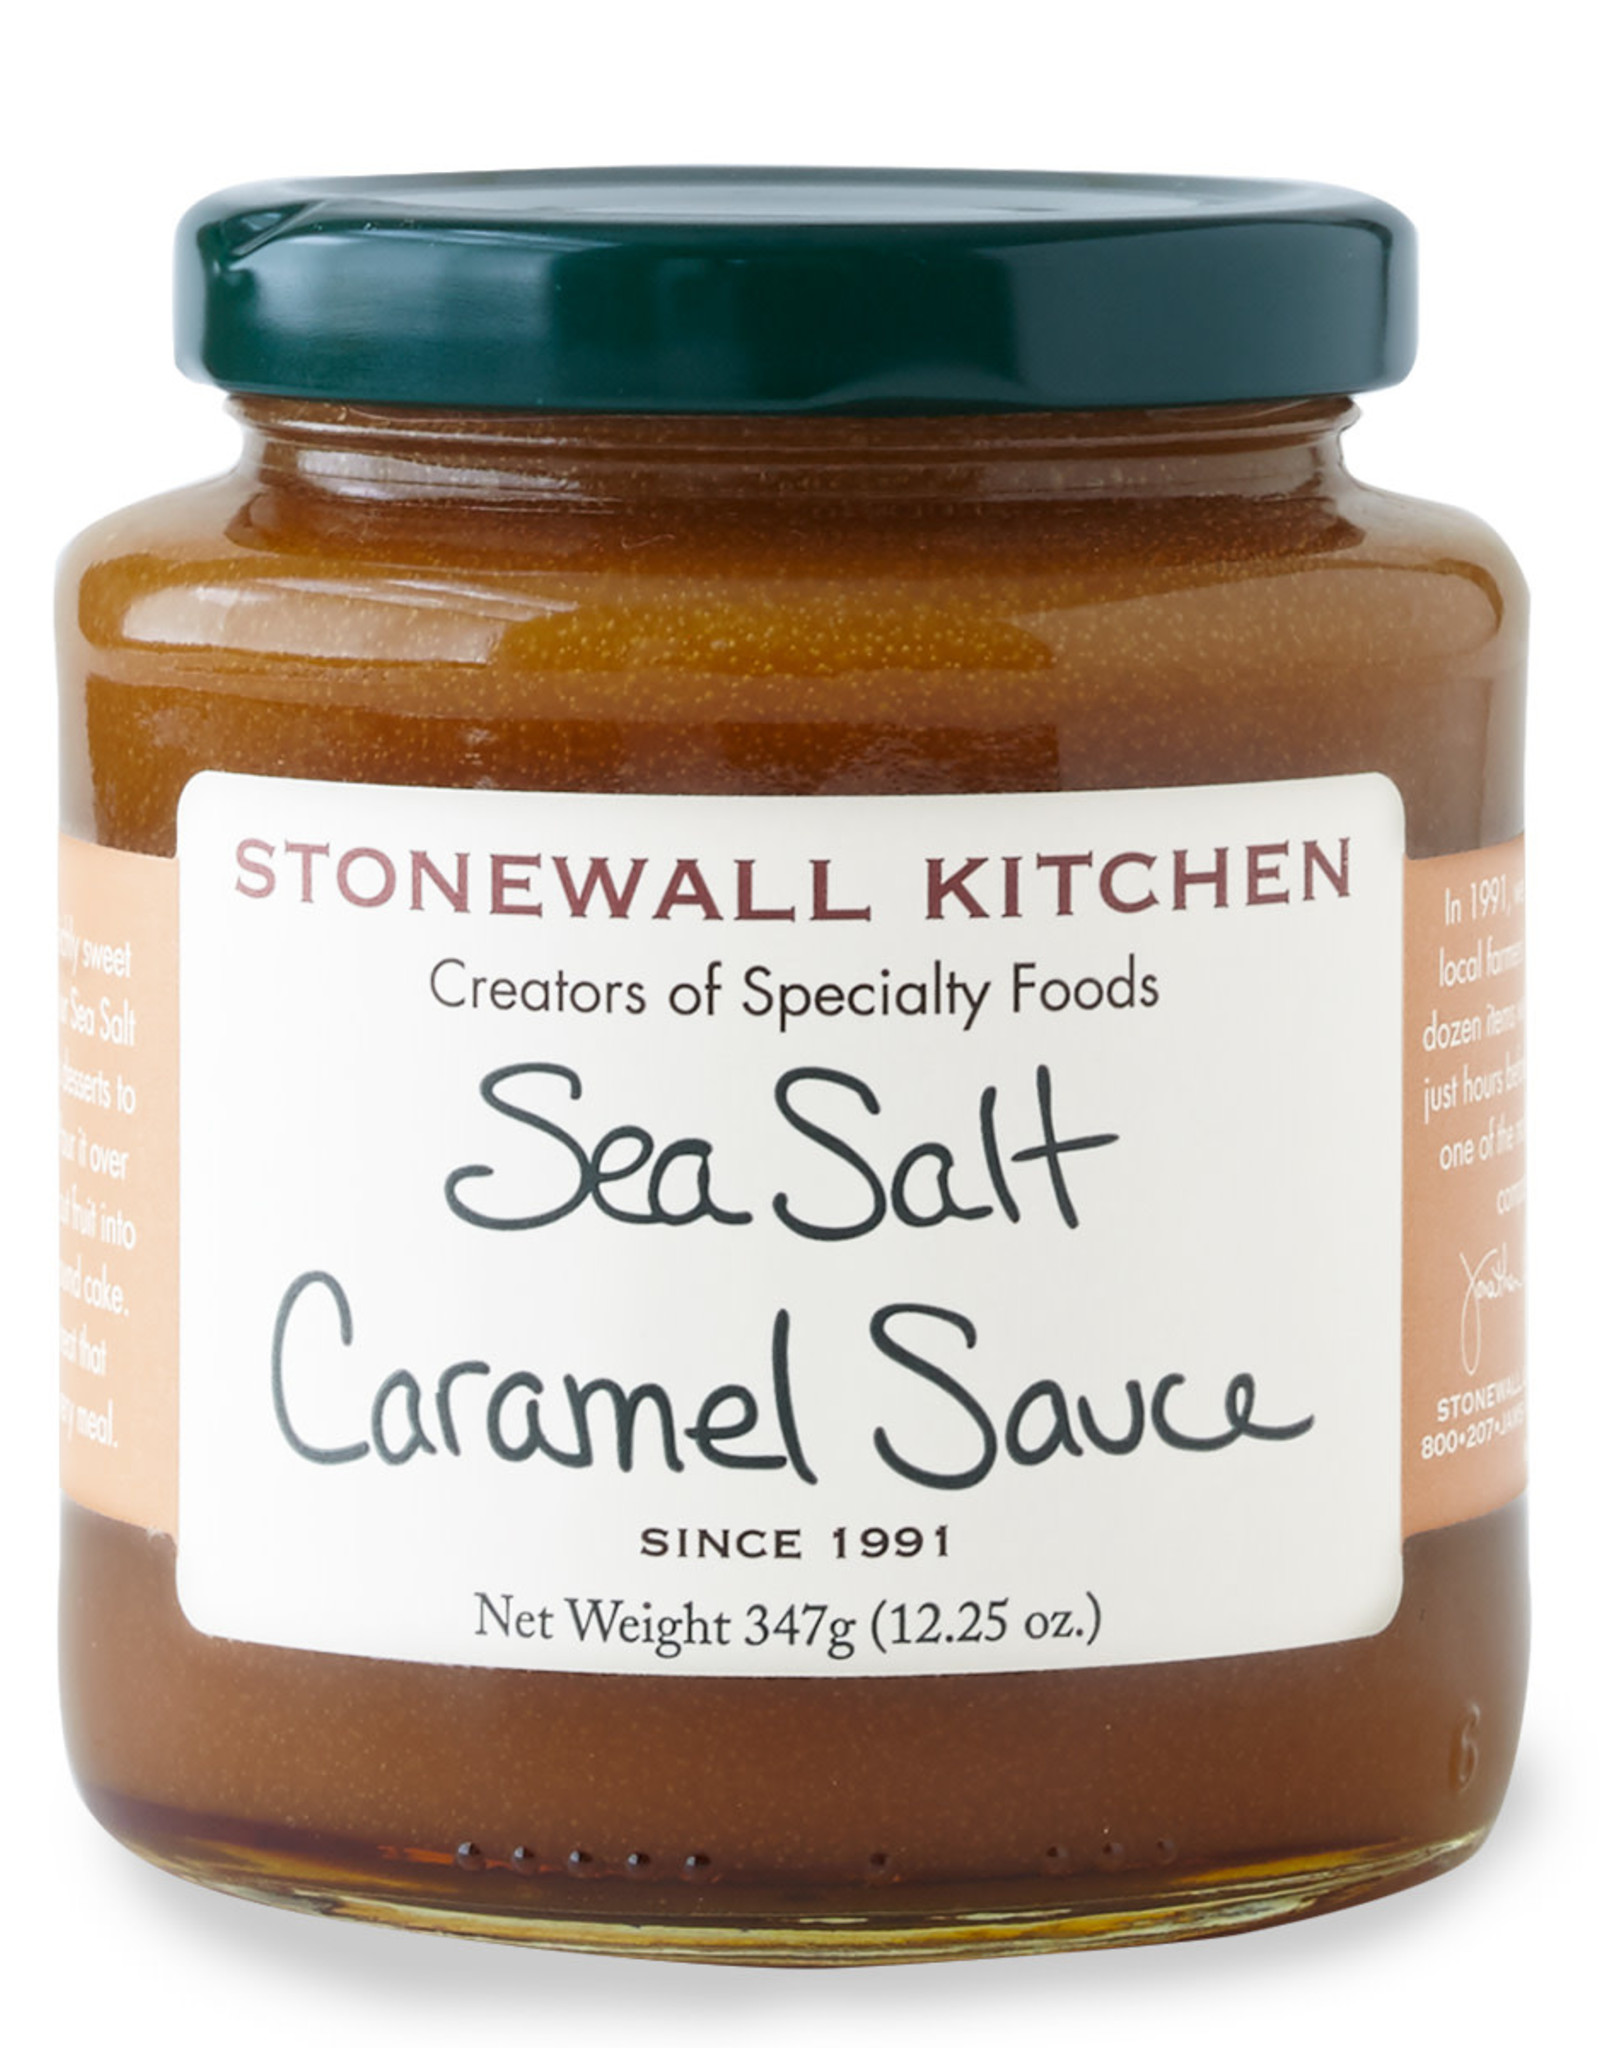 Stonewall Kitchen SEA SALT CARAMEL SAUCE